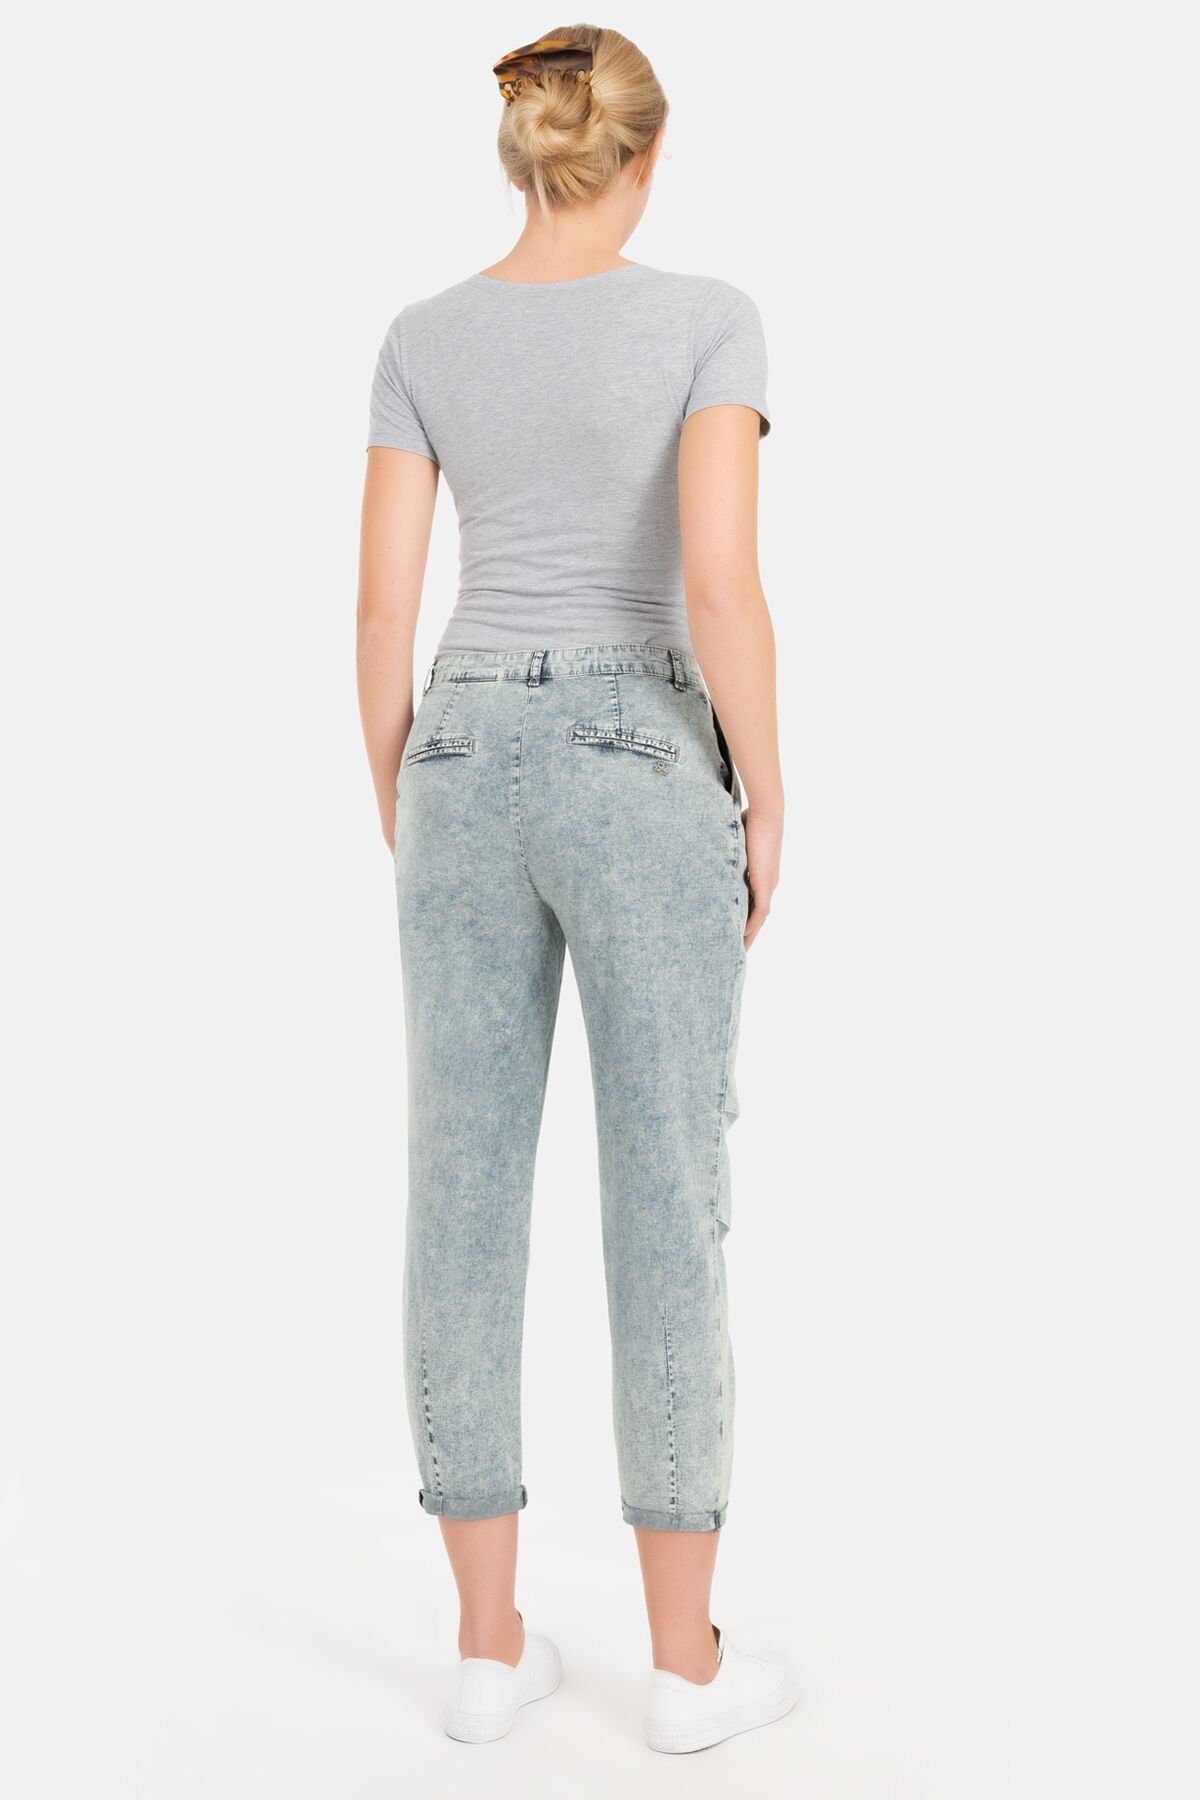 Relax-fit-Jeans Bonny SKY BLEACHED Effektwaschung Recover Pants mit aufwendiger